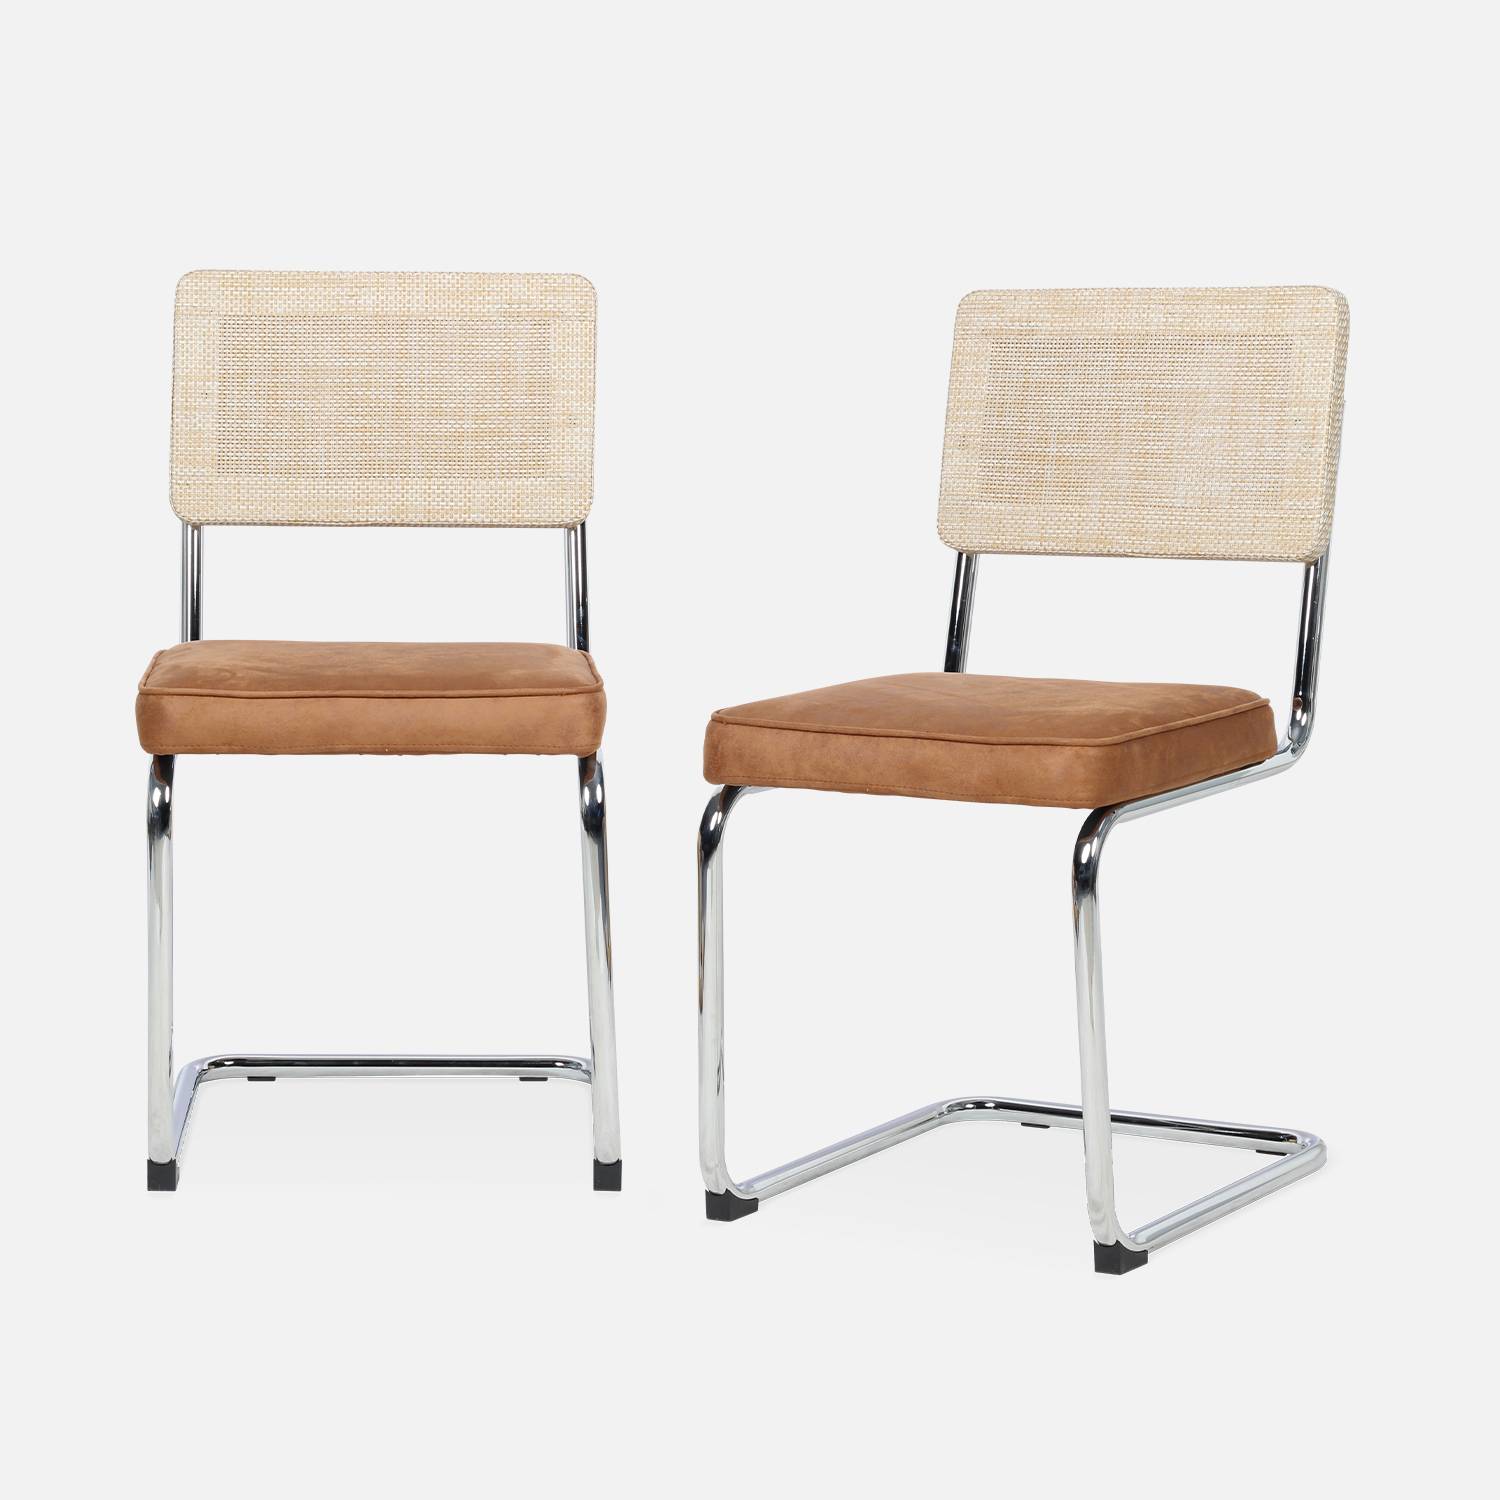 2 sillas cantilever - Maja - tela marrón claro y resina efecto ratán, 46 x 54,5 x 84,5cm  ,sweeek,Photo4